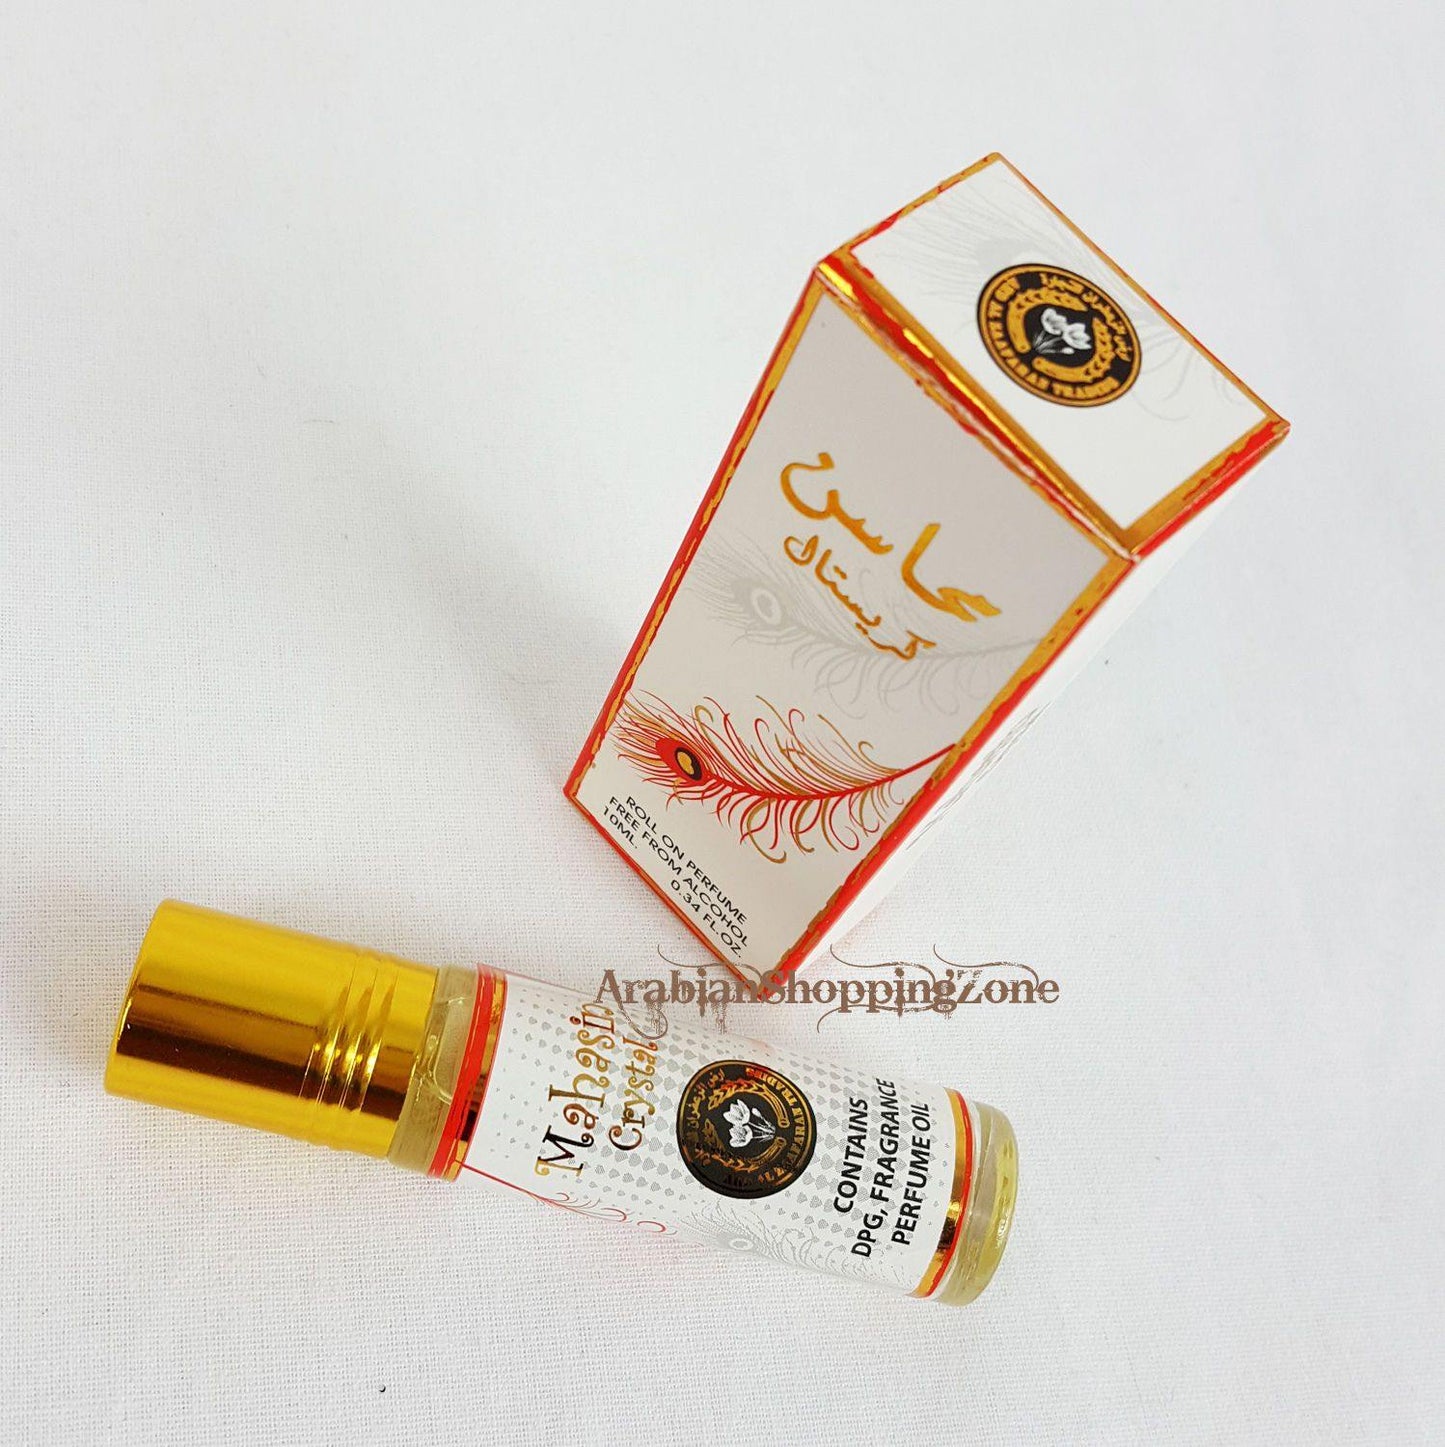 Mahasin Crystal Perfume Oil ATTAR 10ml (0.34OZ) UAE ARD AL ZAAFARAN No Alcohol - Arabian Shopping Zone